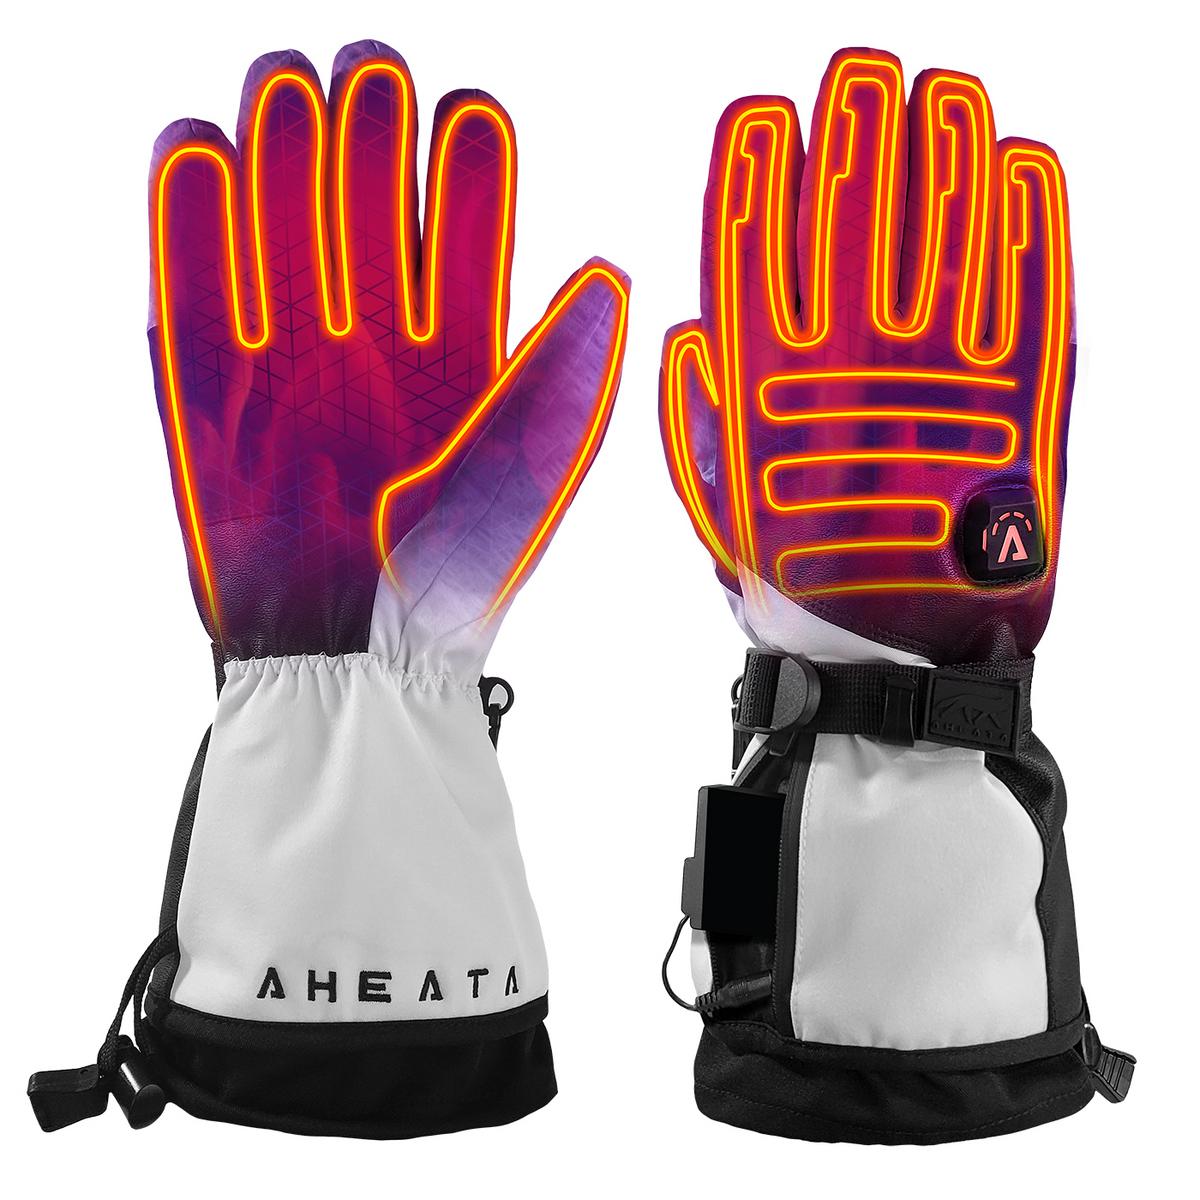 Aheata 7V Battery Heated Flex Textile Gloves - Front